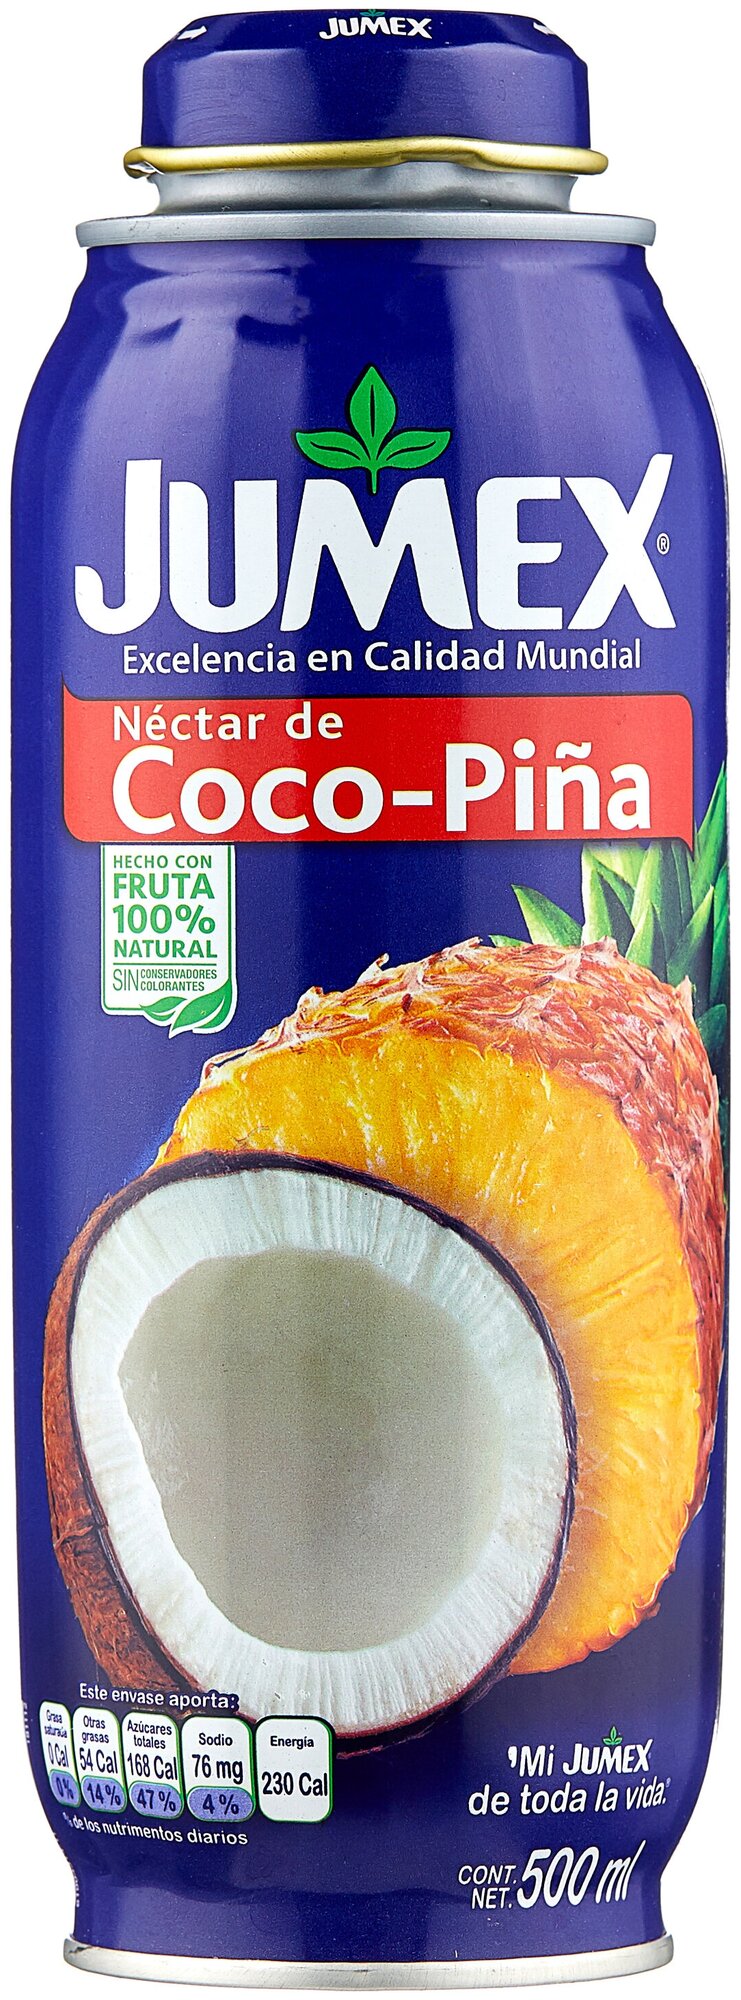 Jumex 473 мл. Кокосово-ананасовый нектар (Jumex Nectar de Coco-Pina) ал/б - фотография № 1